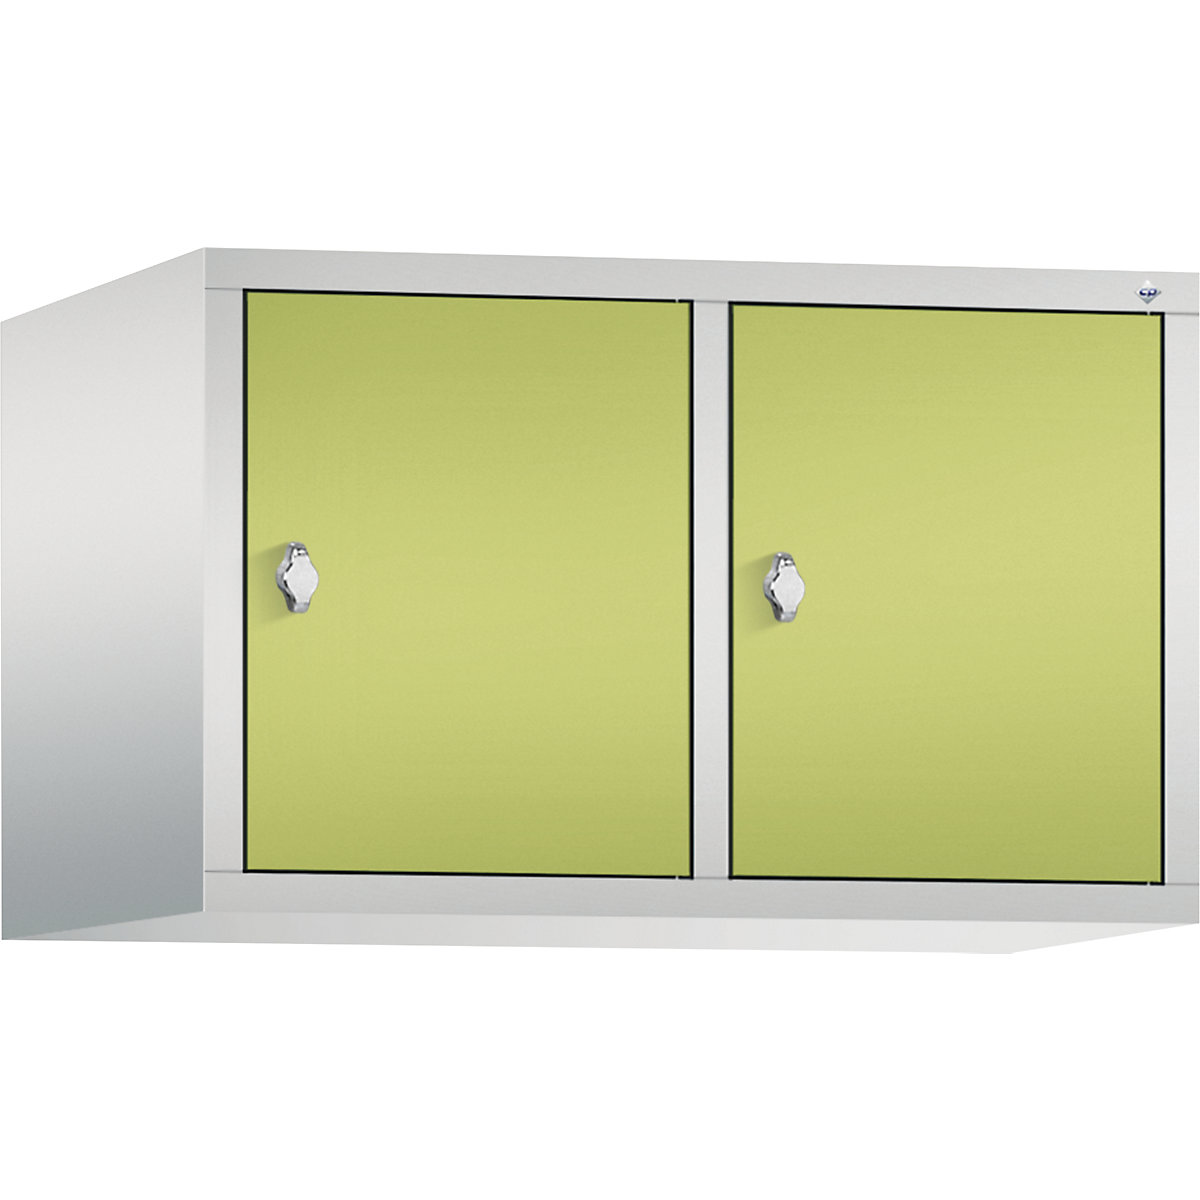 C+P – Altillo CLASSIC, 2 compartimentos, anchura de compartimento 400 mm, gris luminoso / verde pistacho